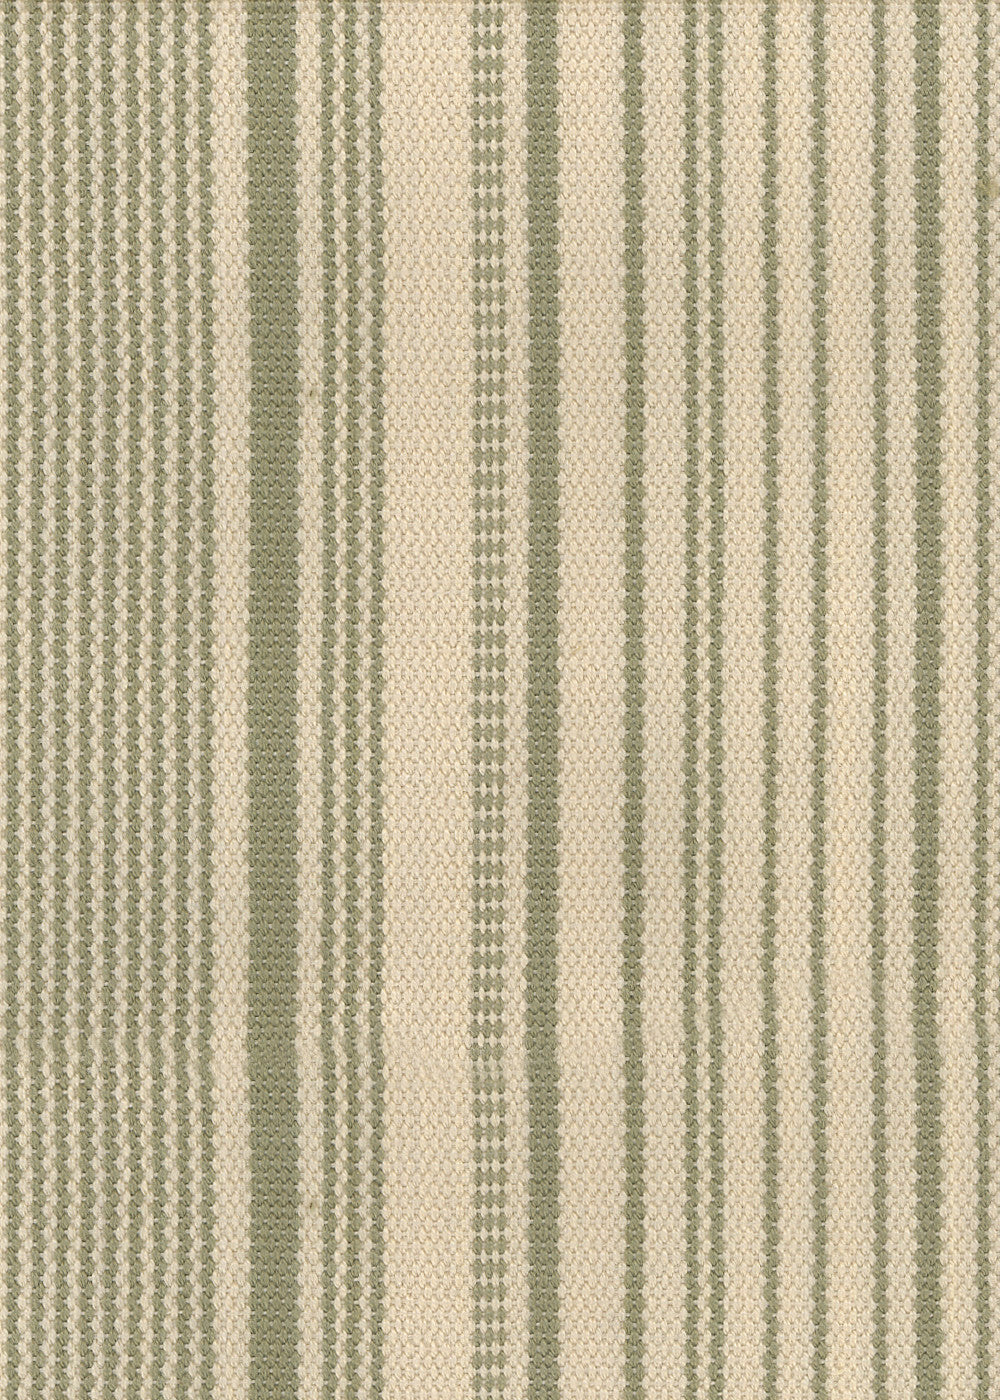 farmhouse fabric with woven sage green stripe